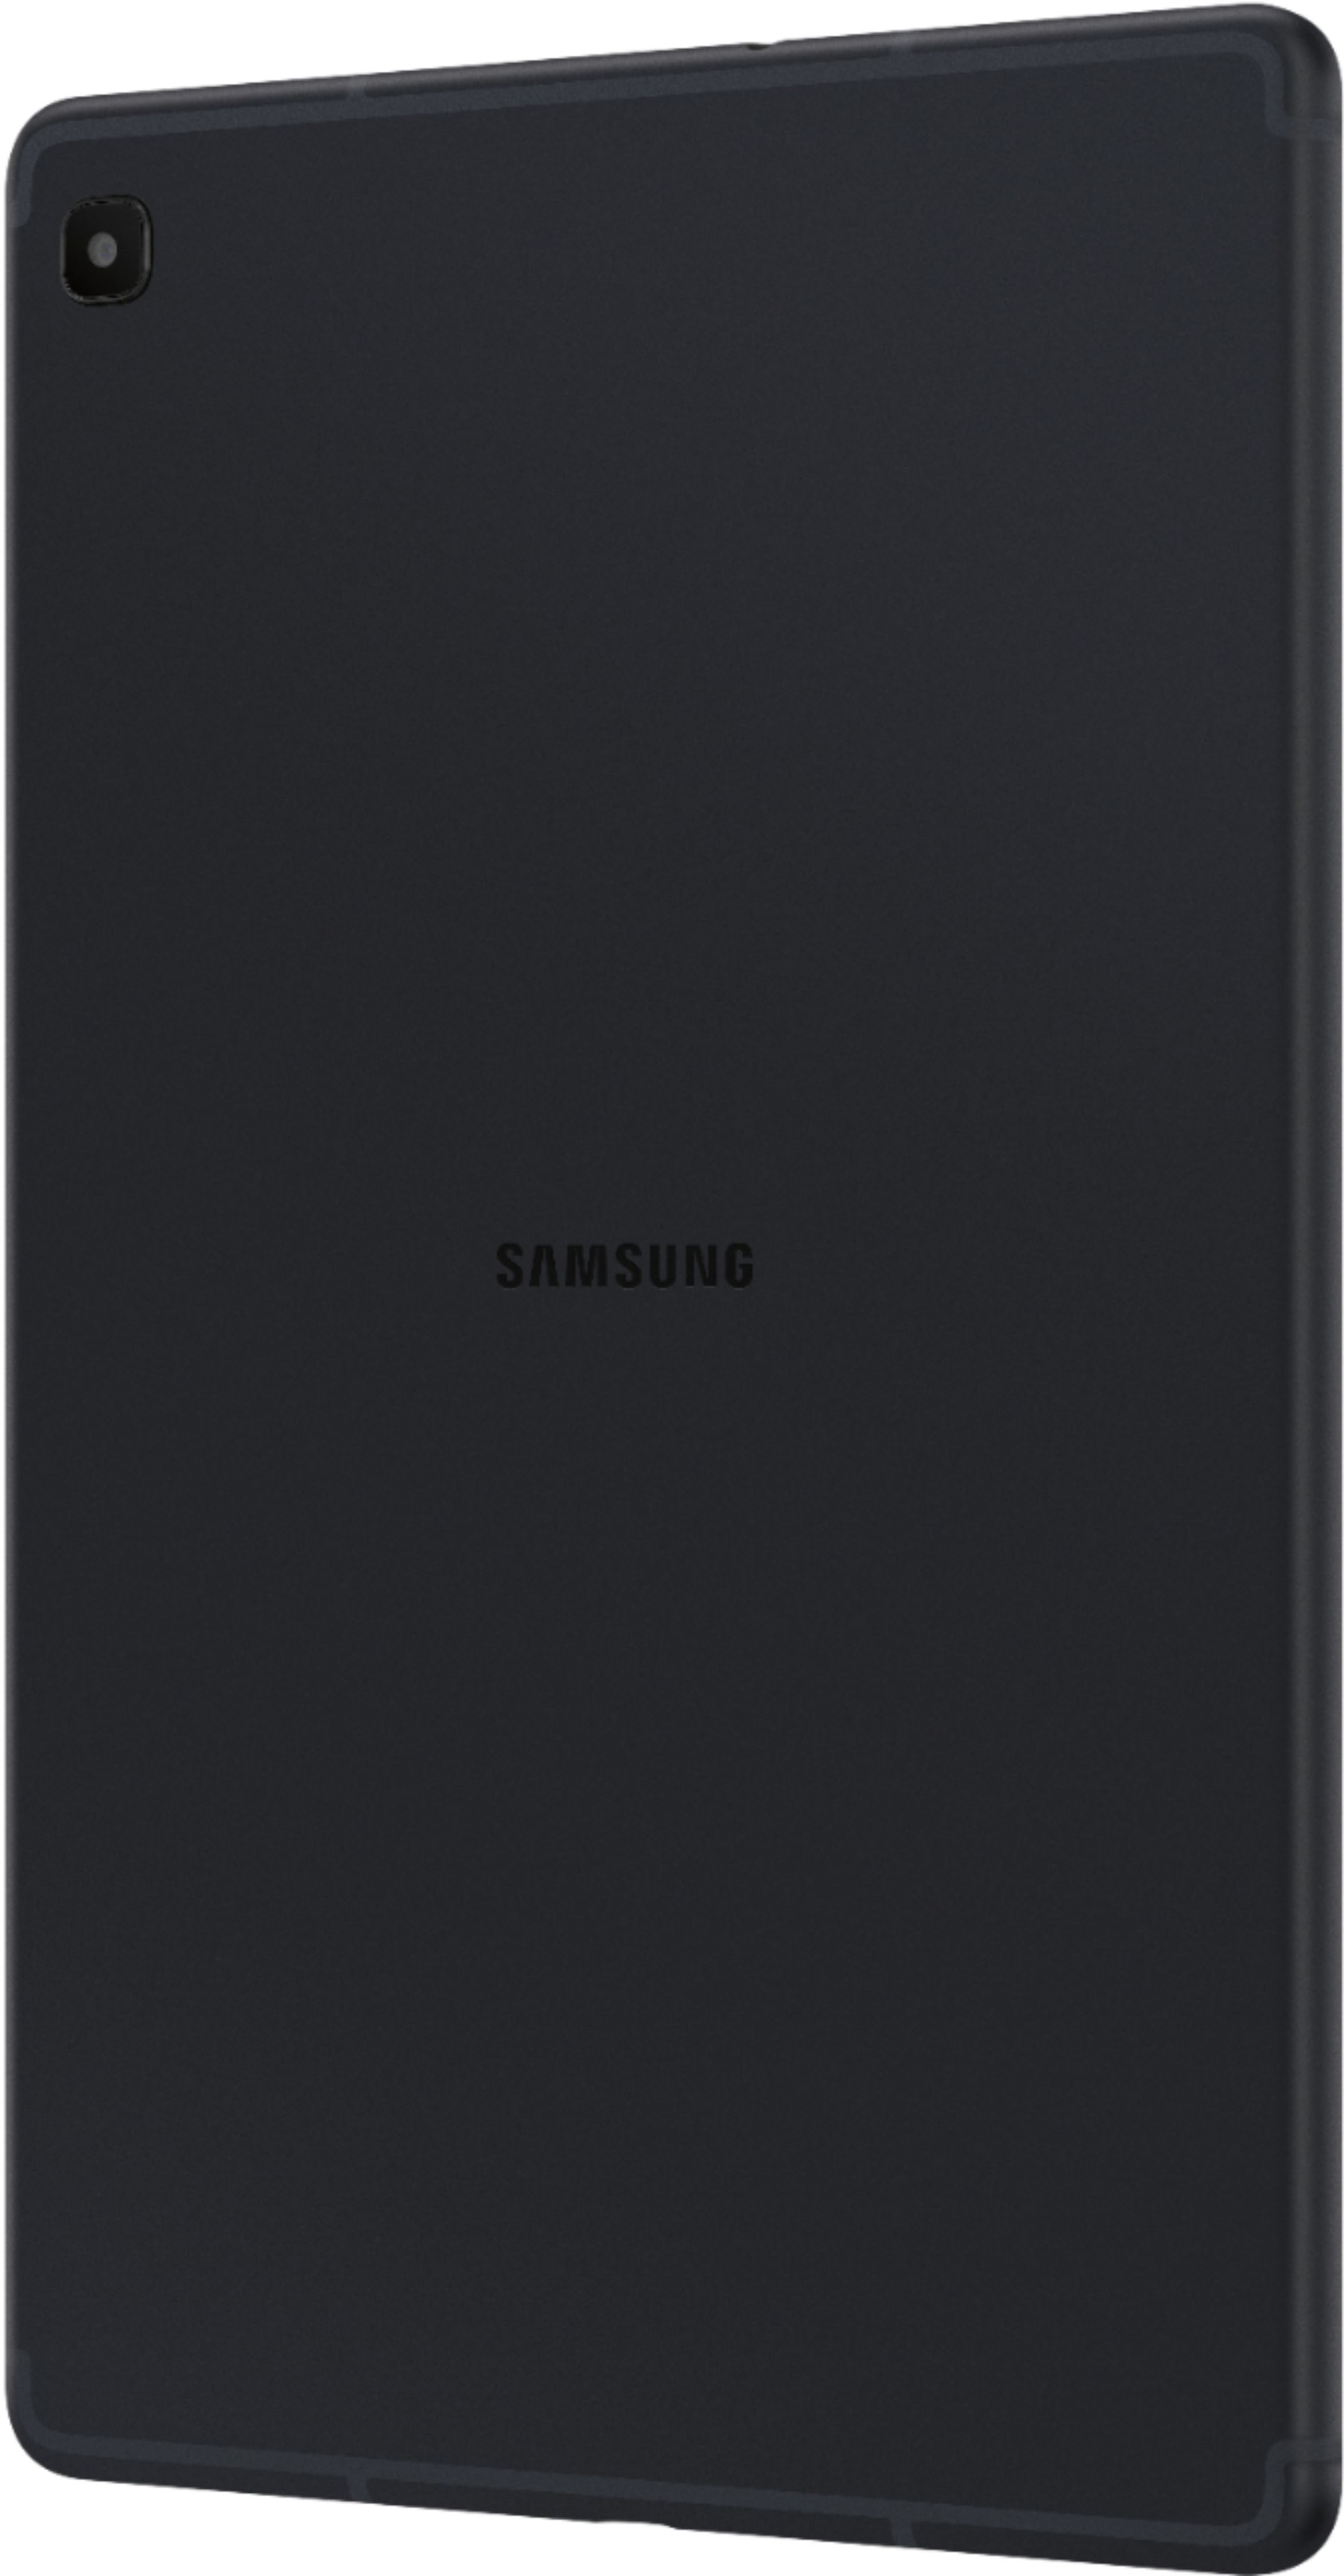 Samsung - Galaxy Tab S6 Lite - 64 Go - Wifi - Oxford Gray